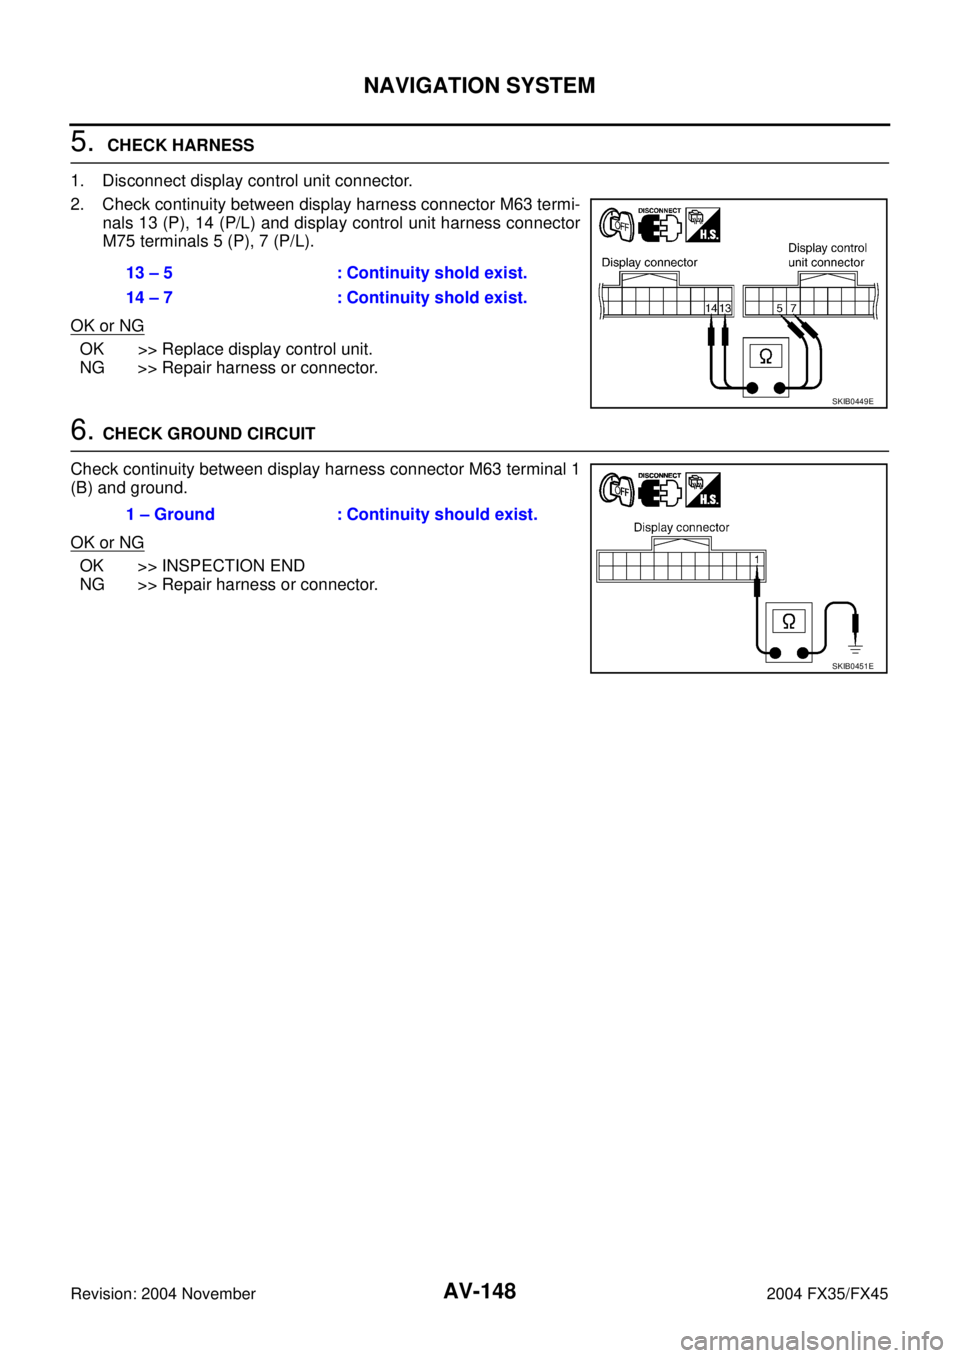 INFINITI FX35 2004  Service Manual AV-148
NAVIGATION SYSTEM
Revision: 2004 November 2004 FX35/FX45
5.  CHECK HARNESS
1. Disconnect display control unit connector.
2. Check continuity between display harness connector M63 termi-
nals 13